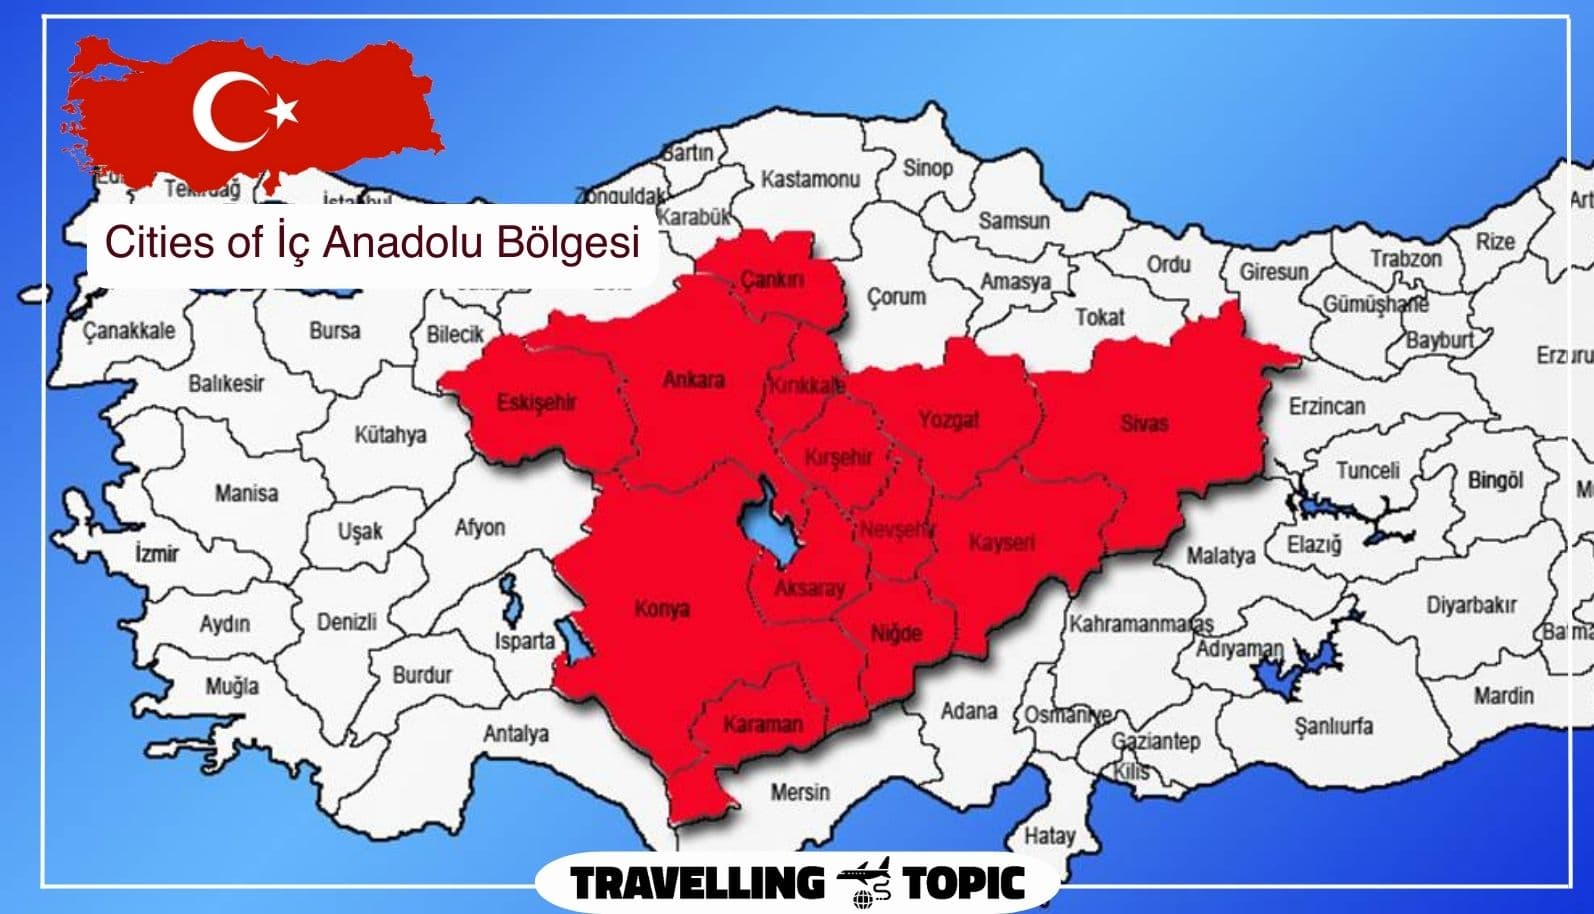 Cities of İç Anadolu Bölgesi